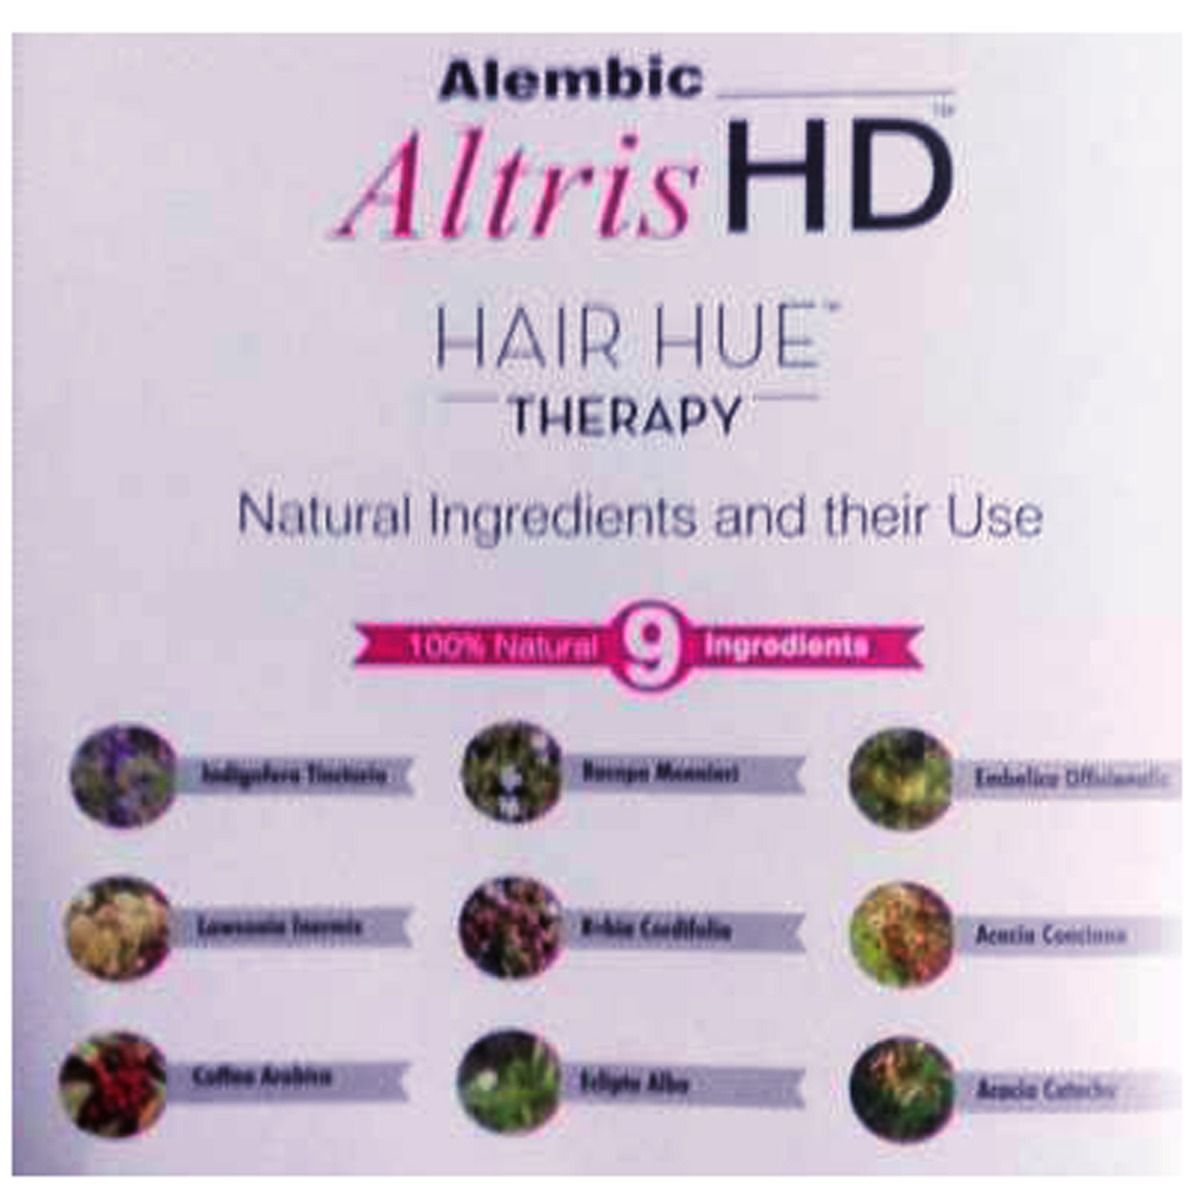 Buy ALTRIS HD HAIR HUE THERAPY SOFT BLACK KI Online  Get Upto 60 OFF at  PharmEasy